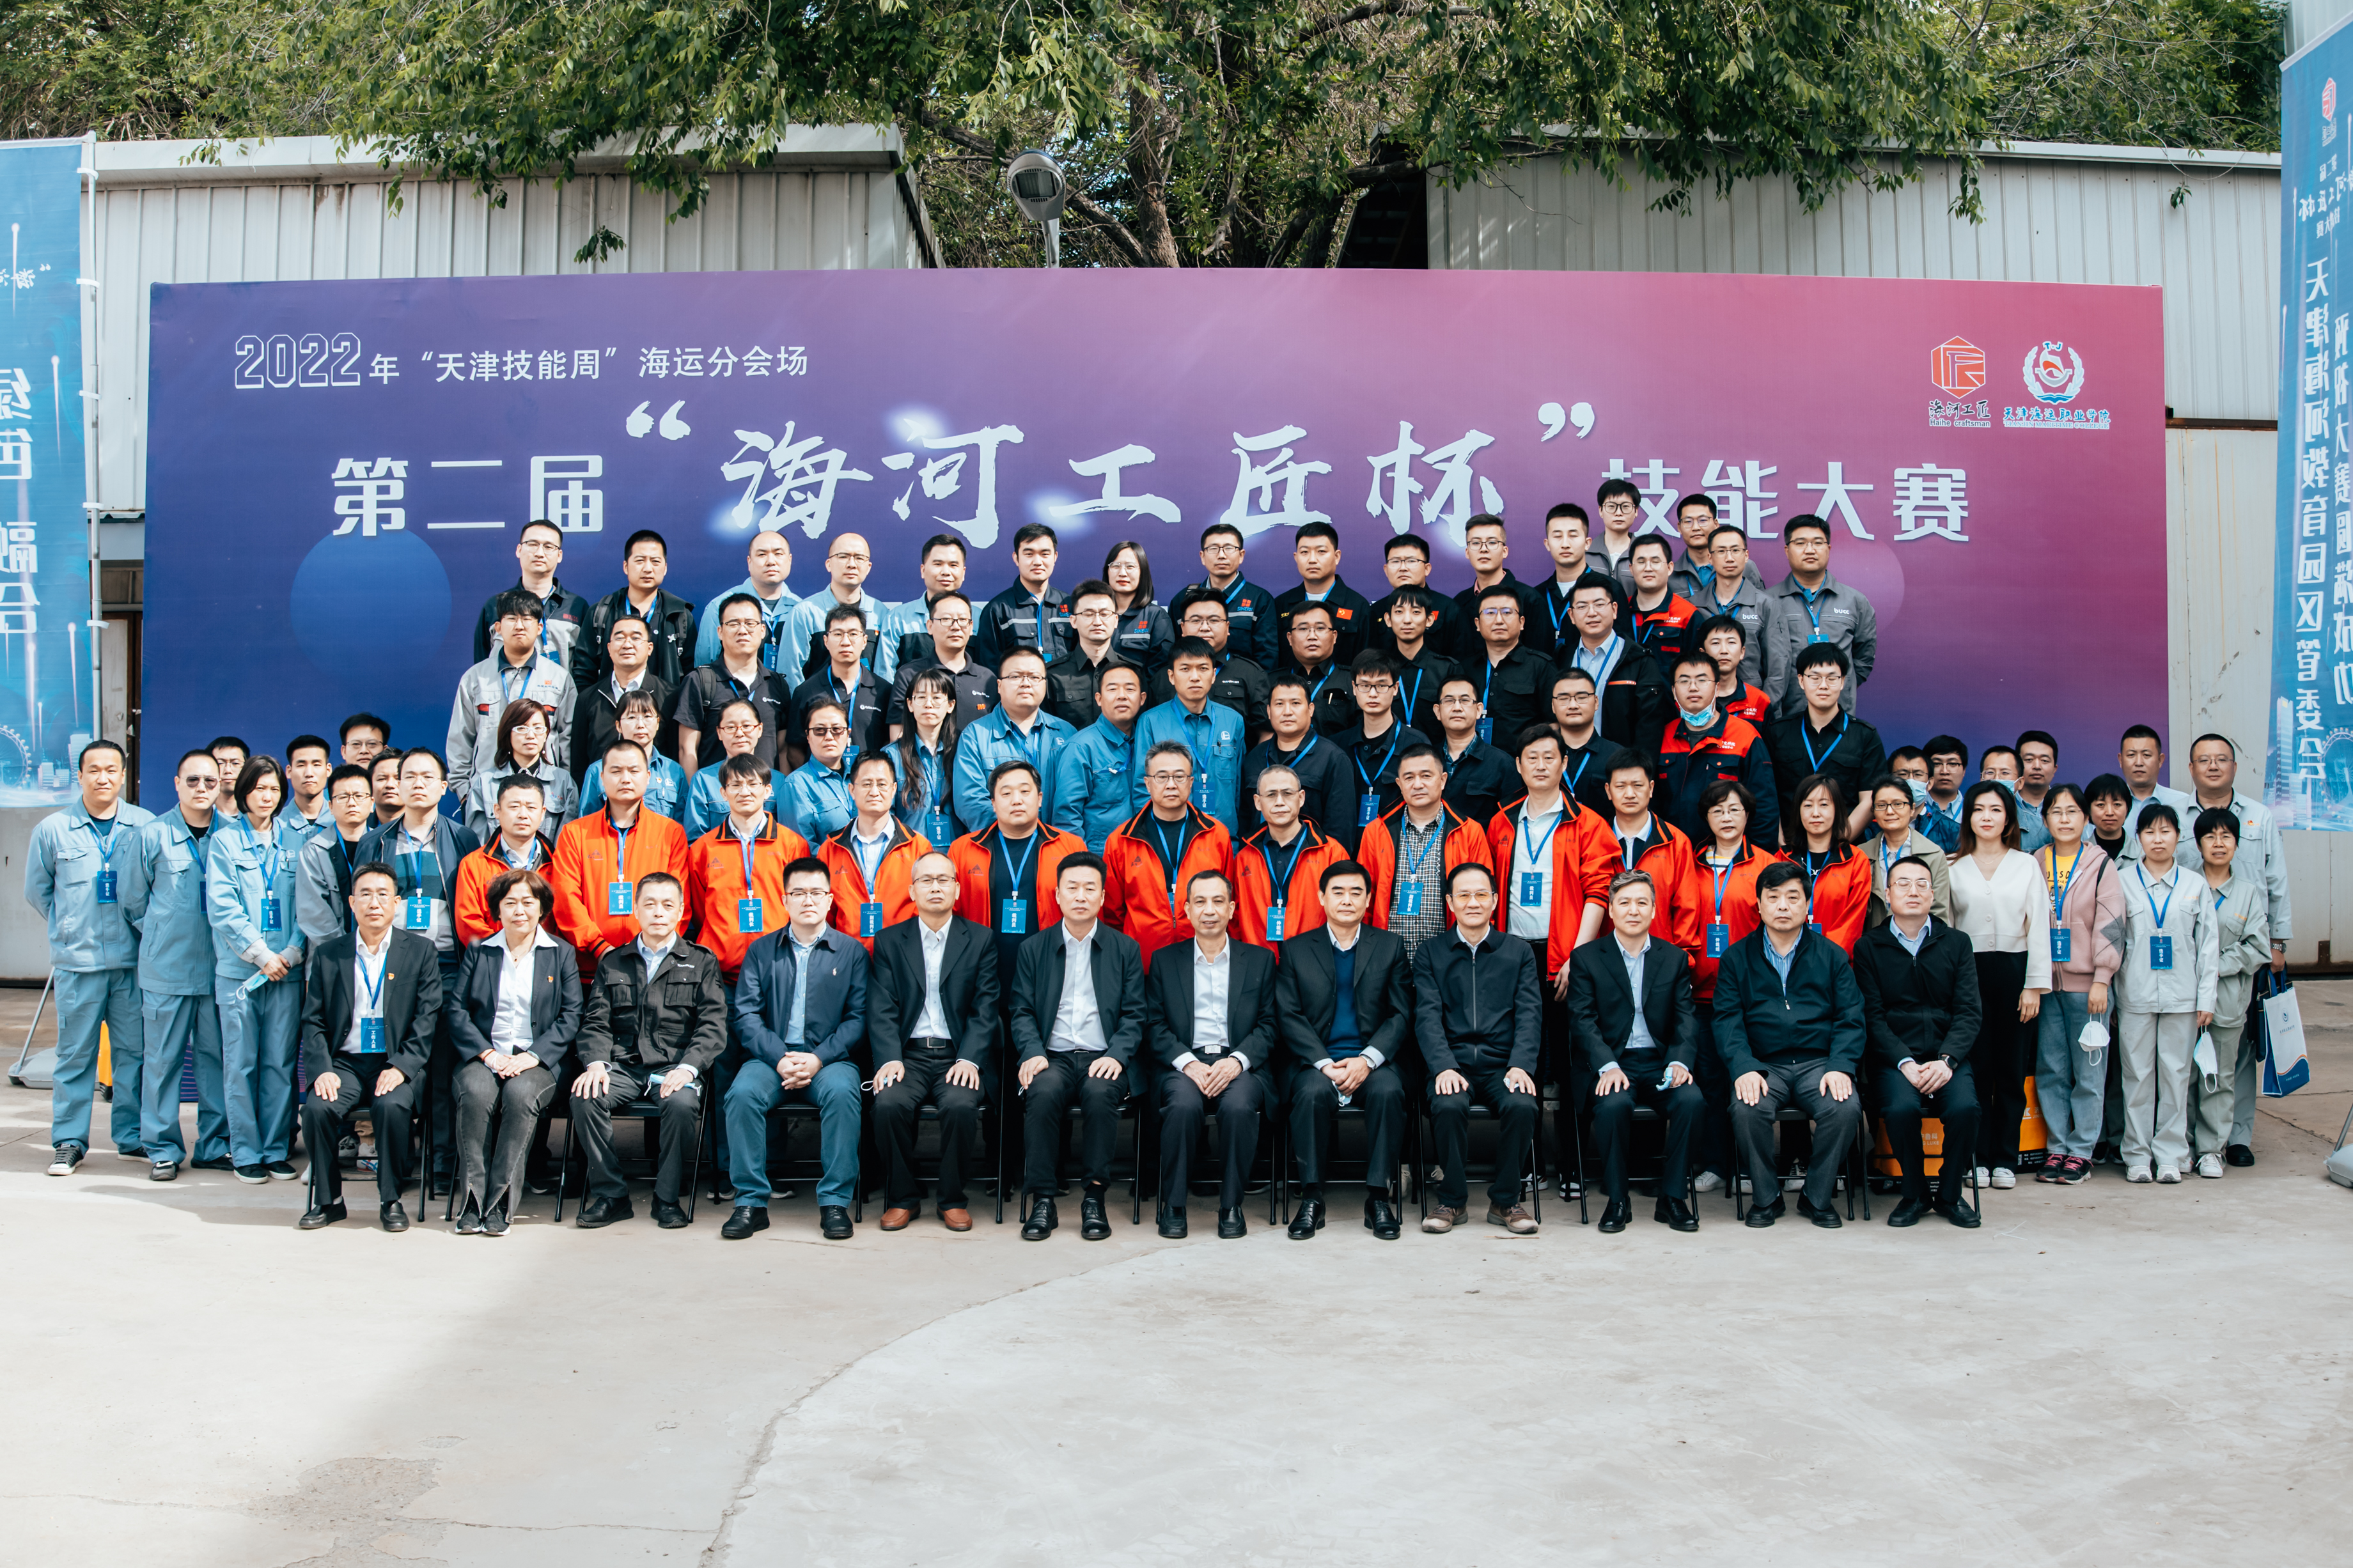 AG真人质量团队参加天津市第二届“海河工匠杯”技能大赛——无损检测技术赛项